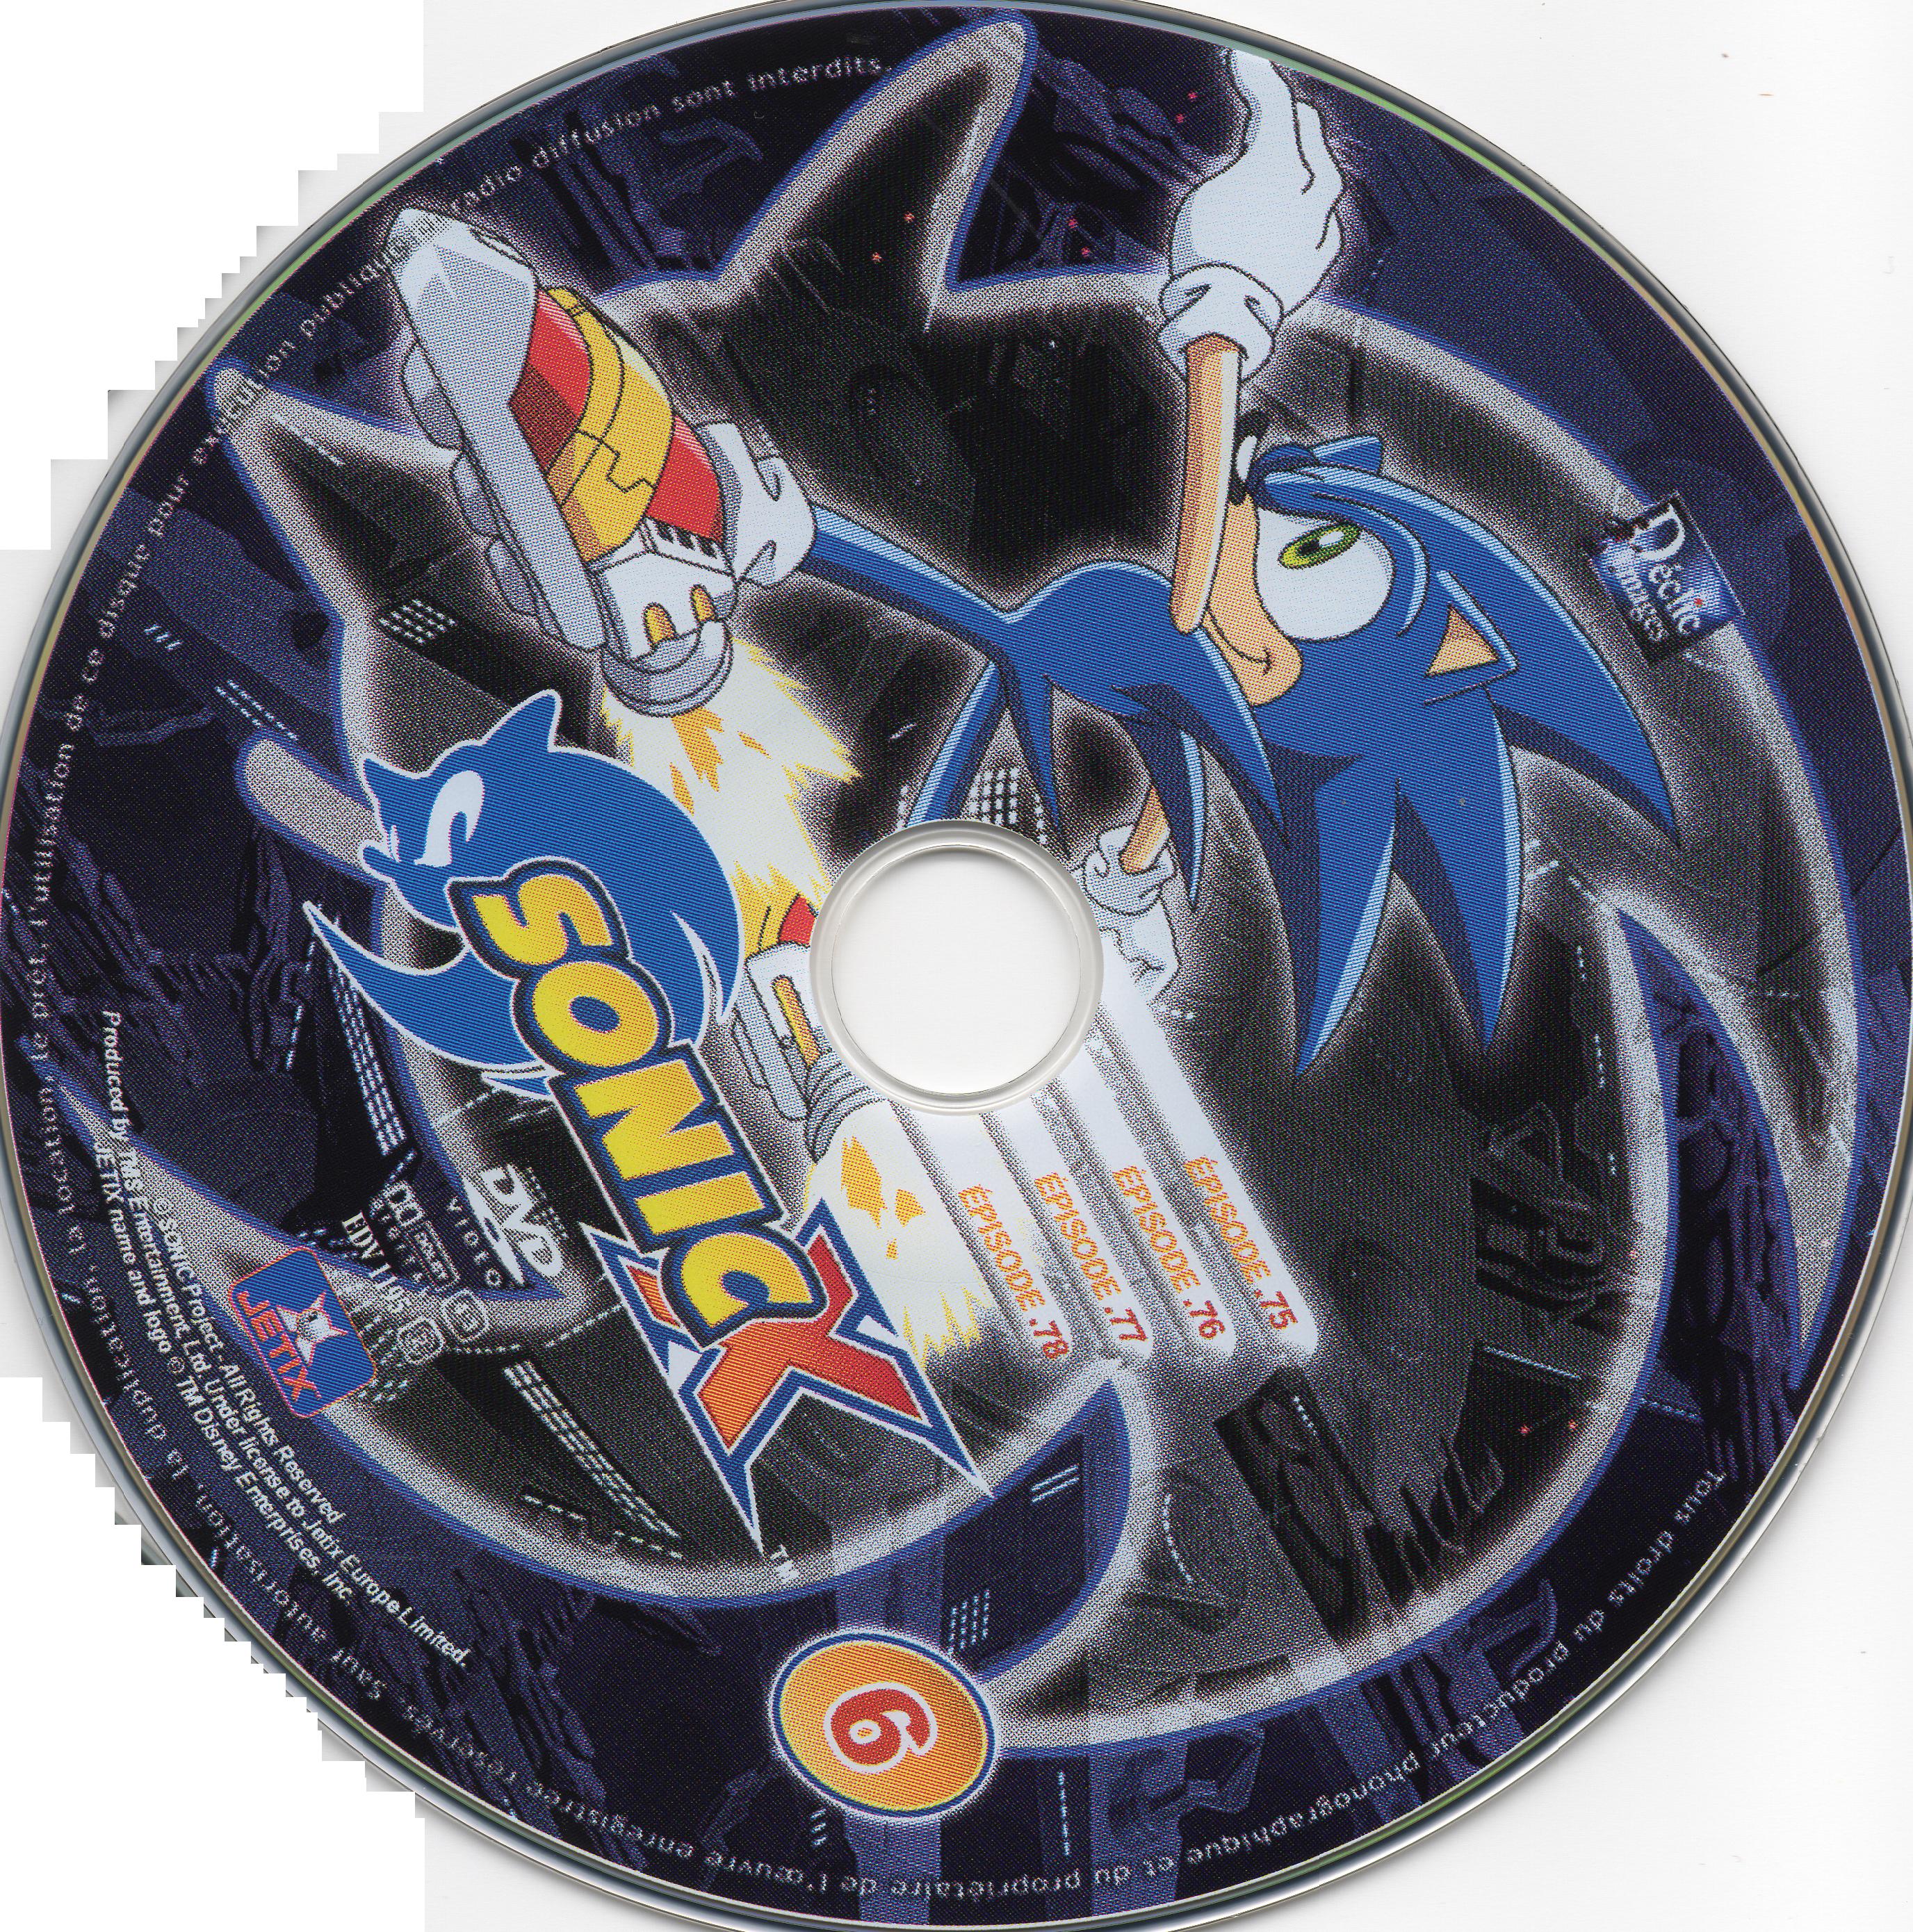 Sonic X Saison 2 DVD 6